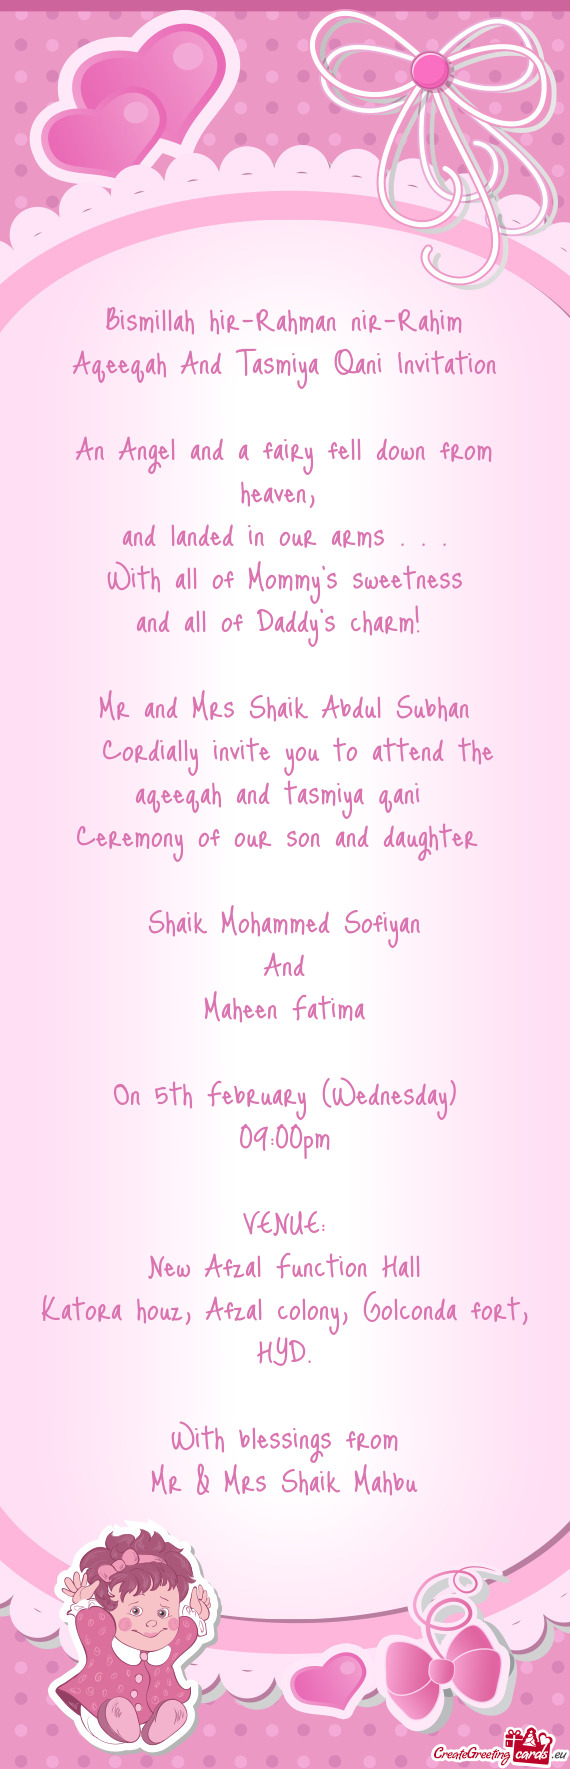 Cordially invite you to attend the aqeeqah and tasmiya qani